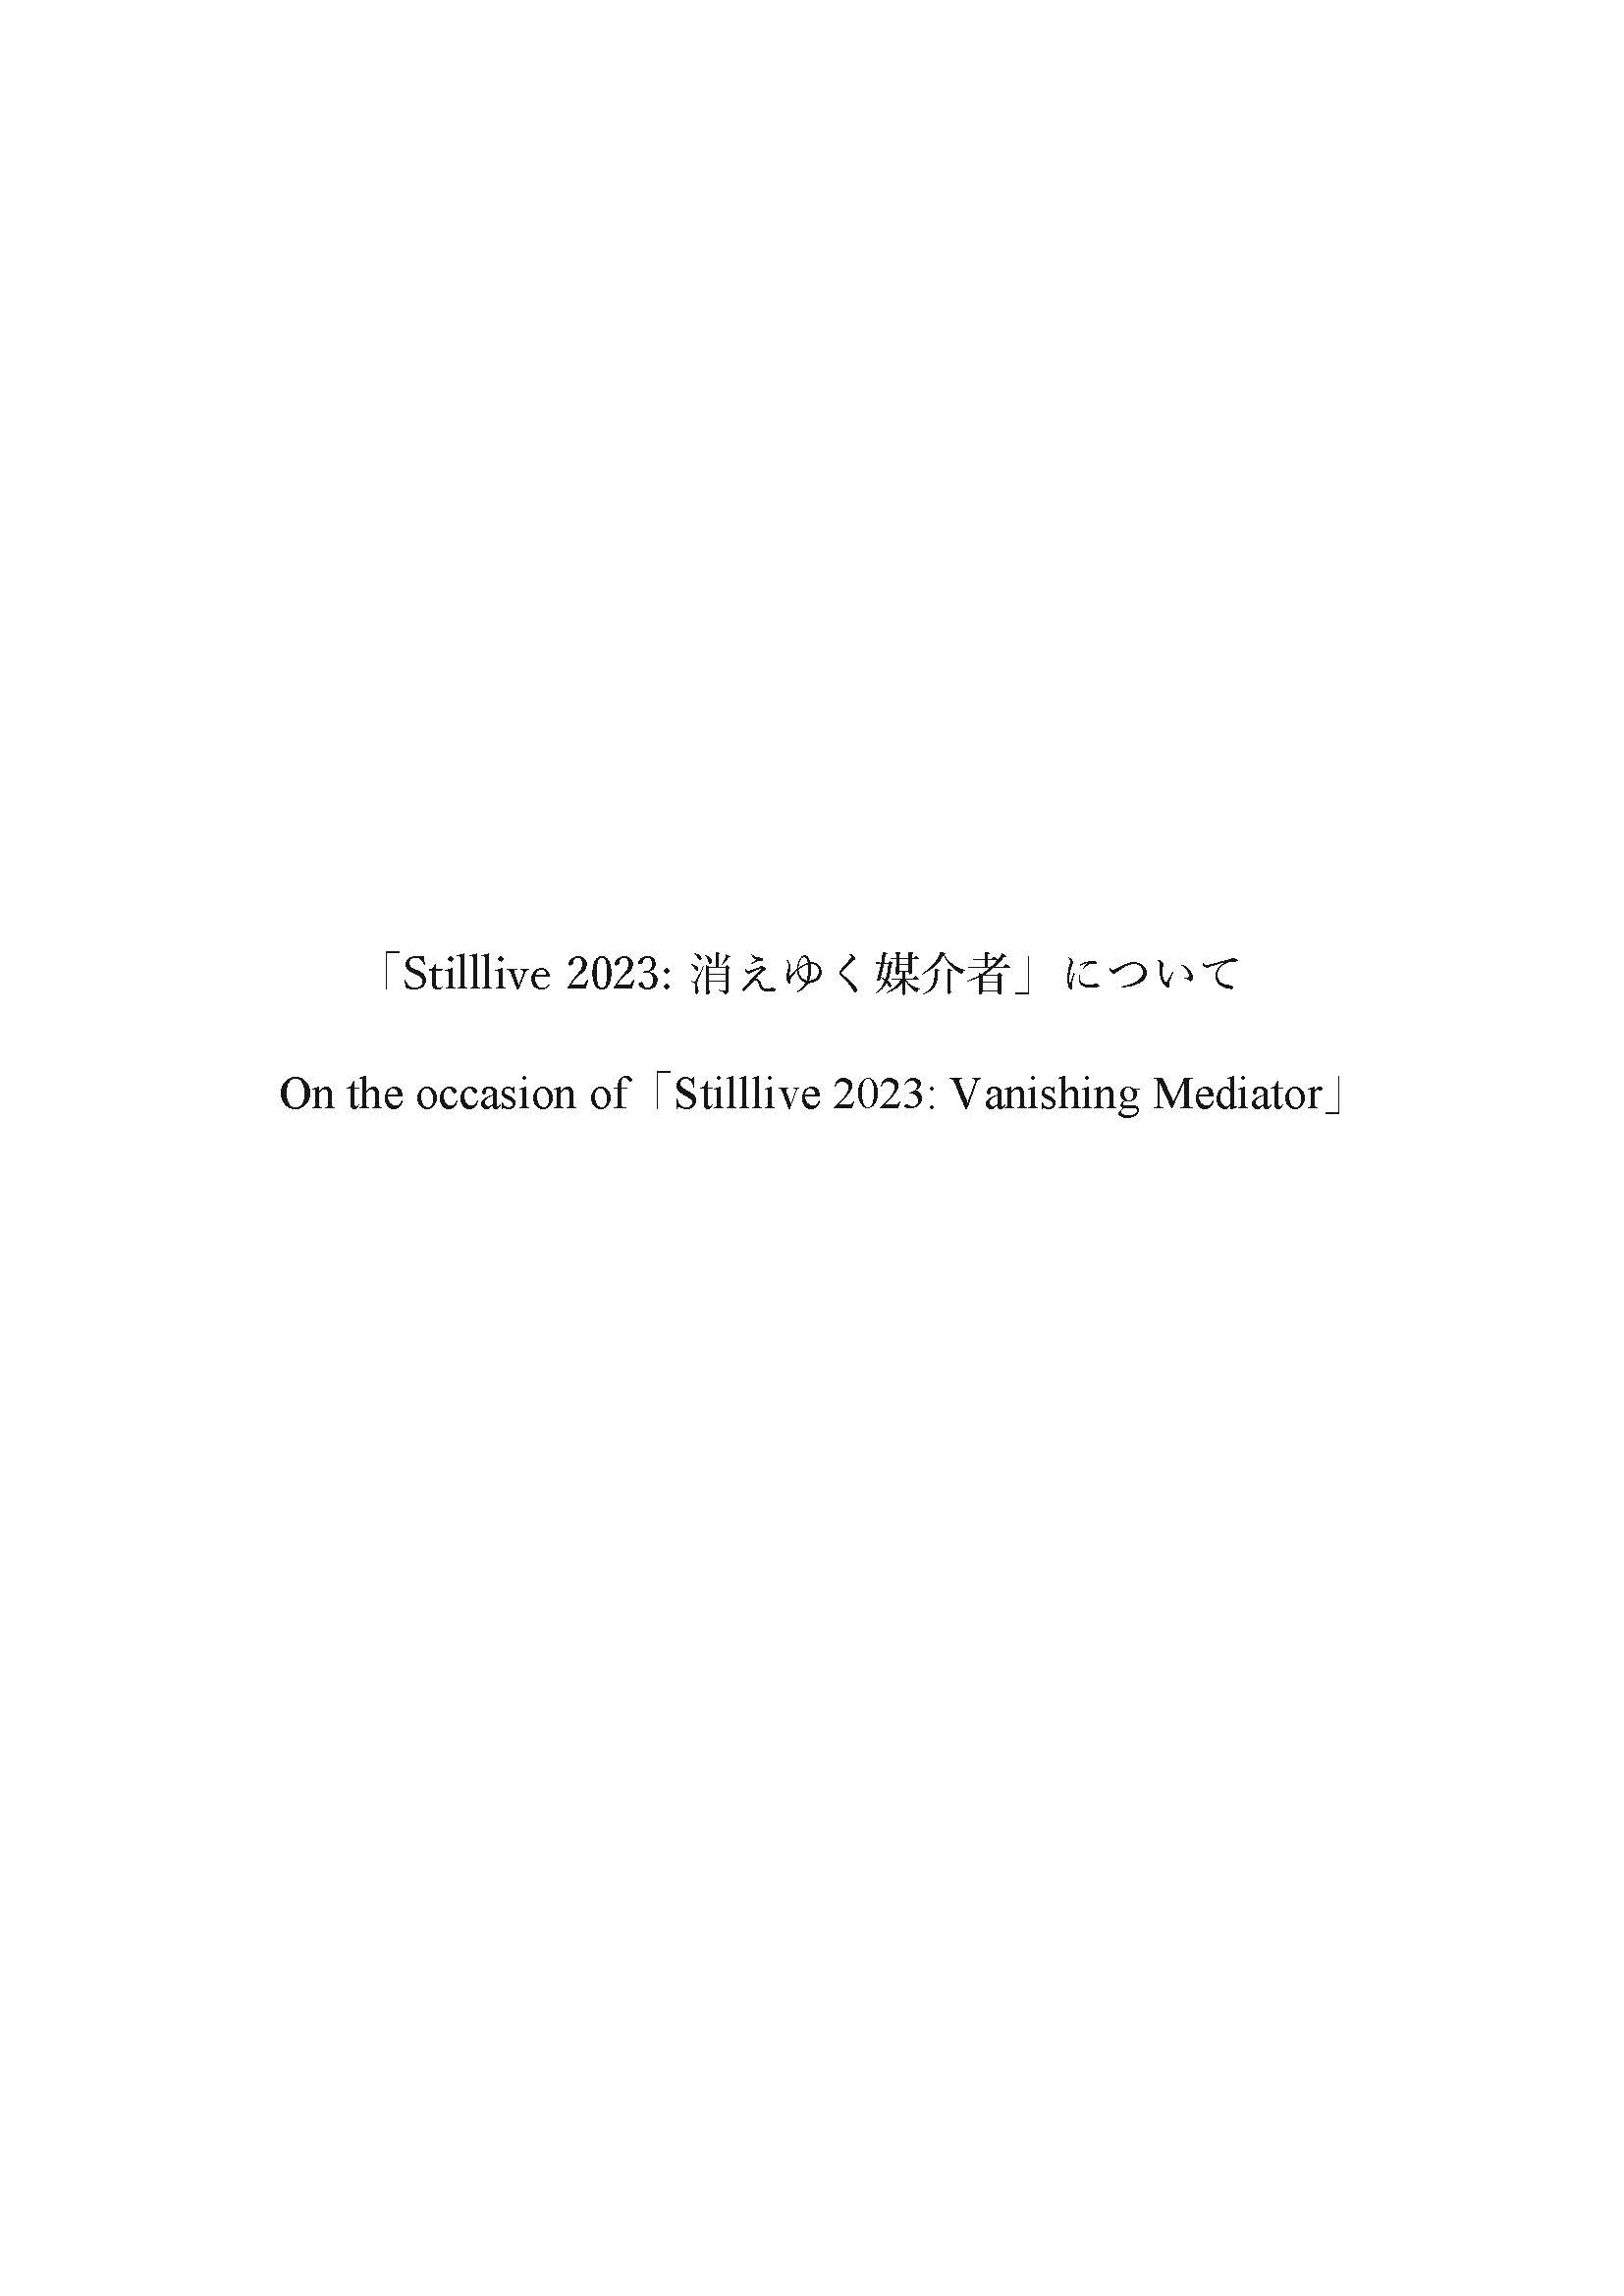 On the occasion of「Stilllive 2023: Vanishing Mediator」